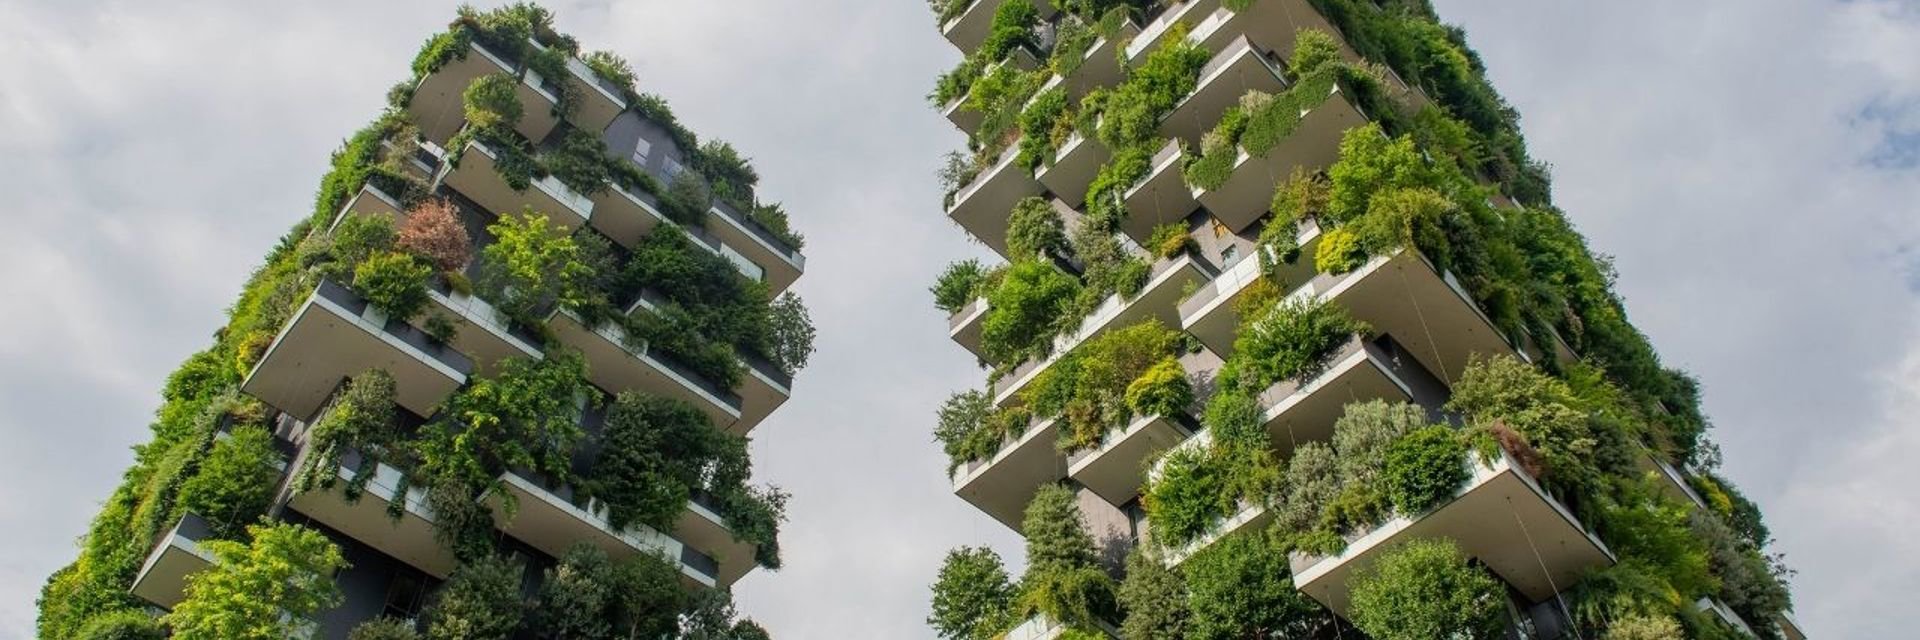 Twee gebouwen met groene beplanting